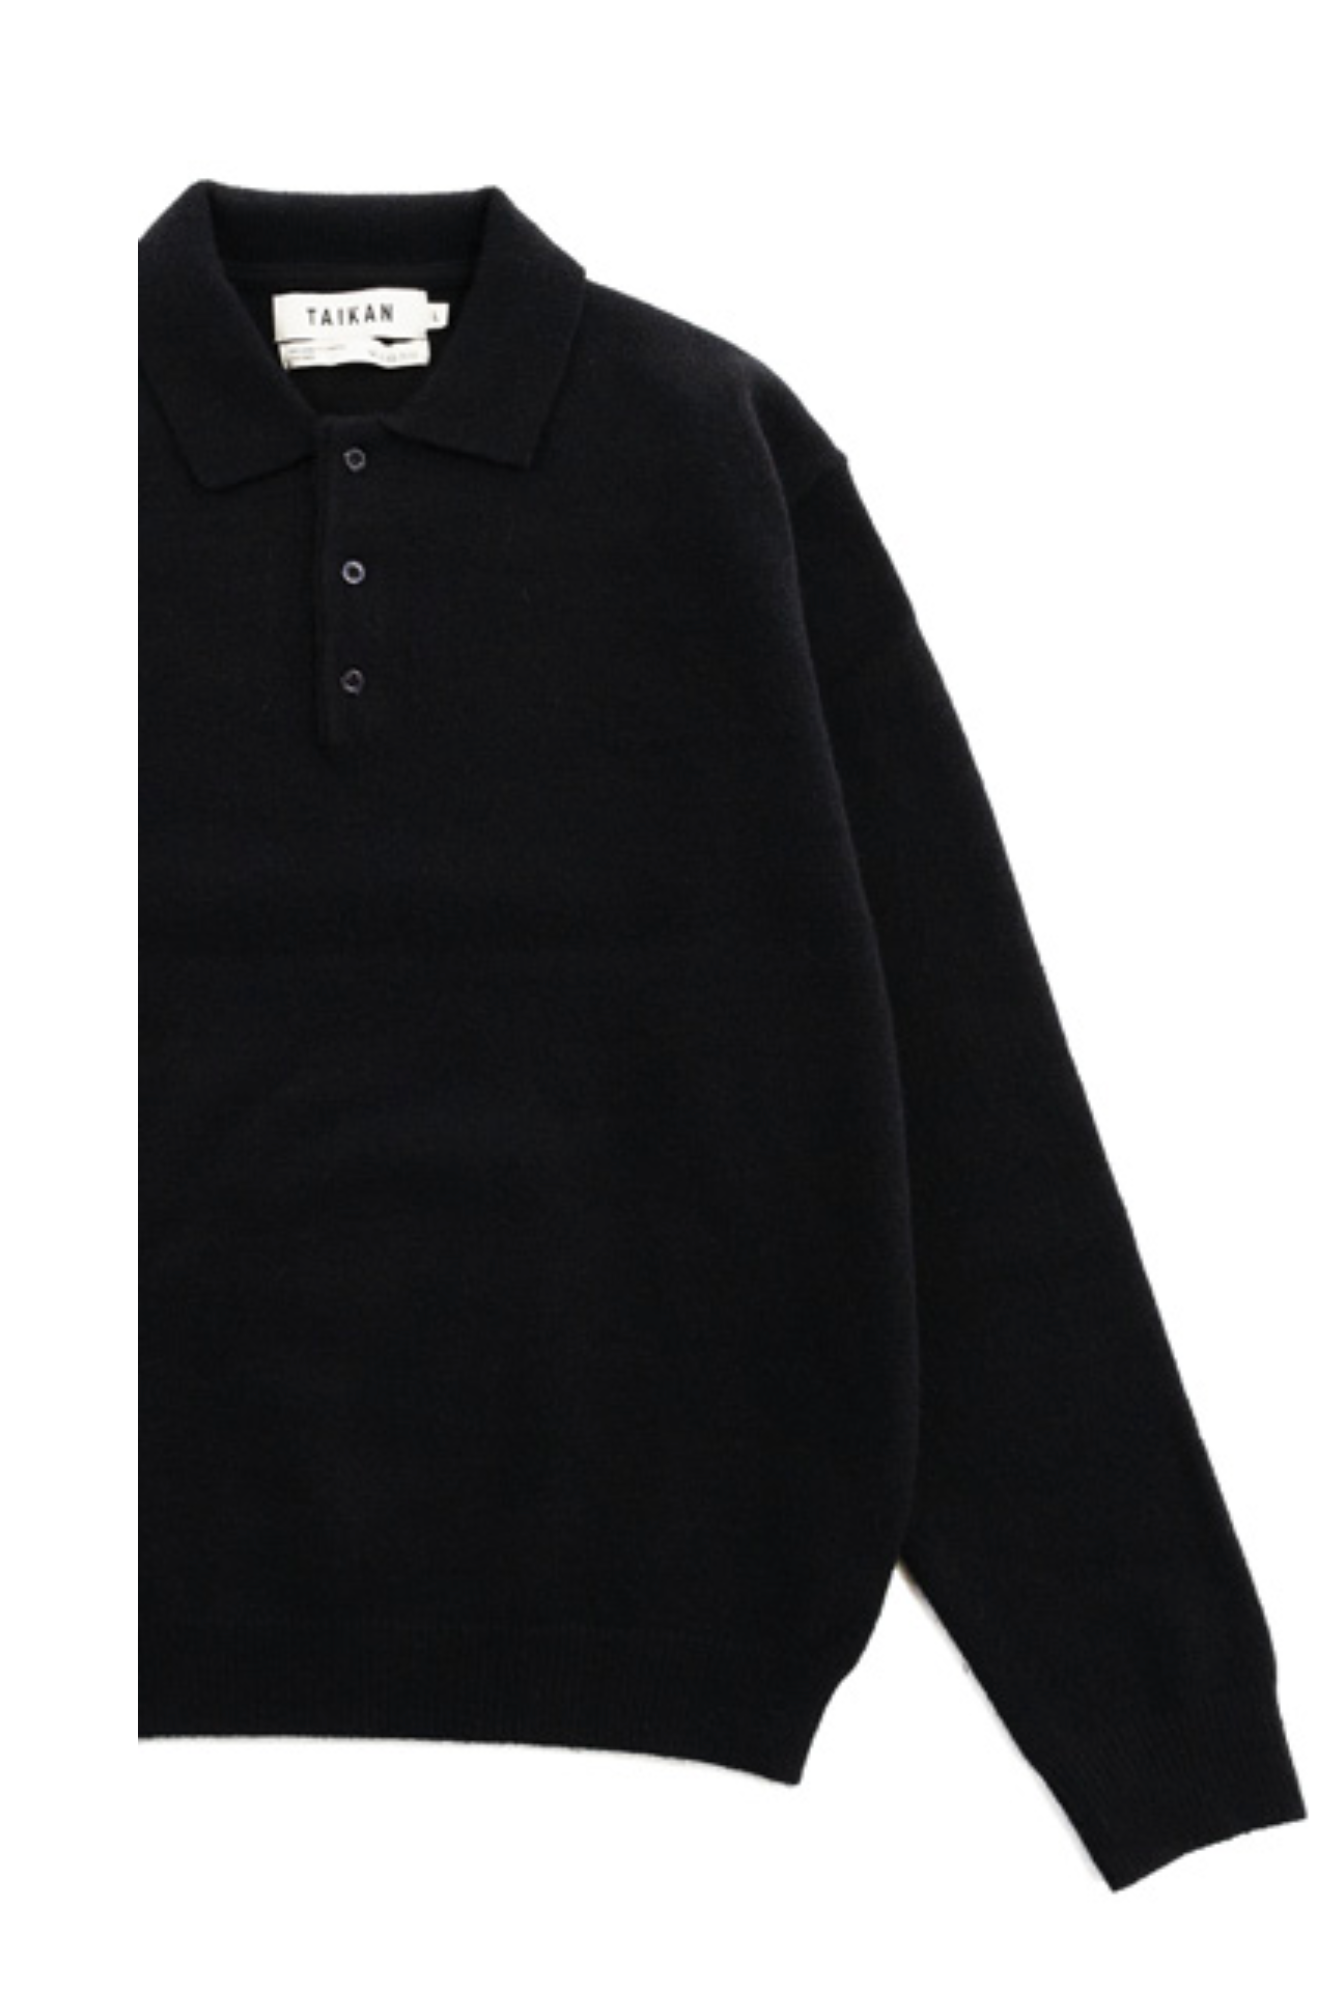 Taikan Marle L/S Polo Sweater - Black